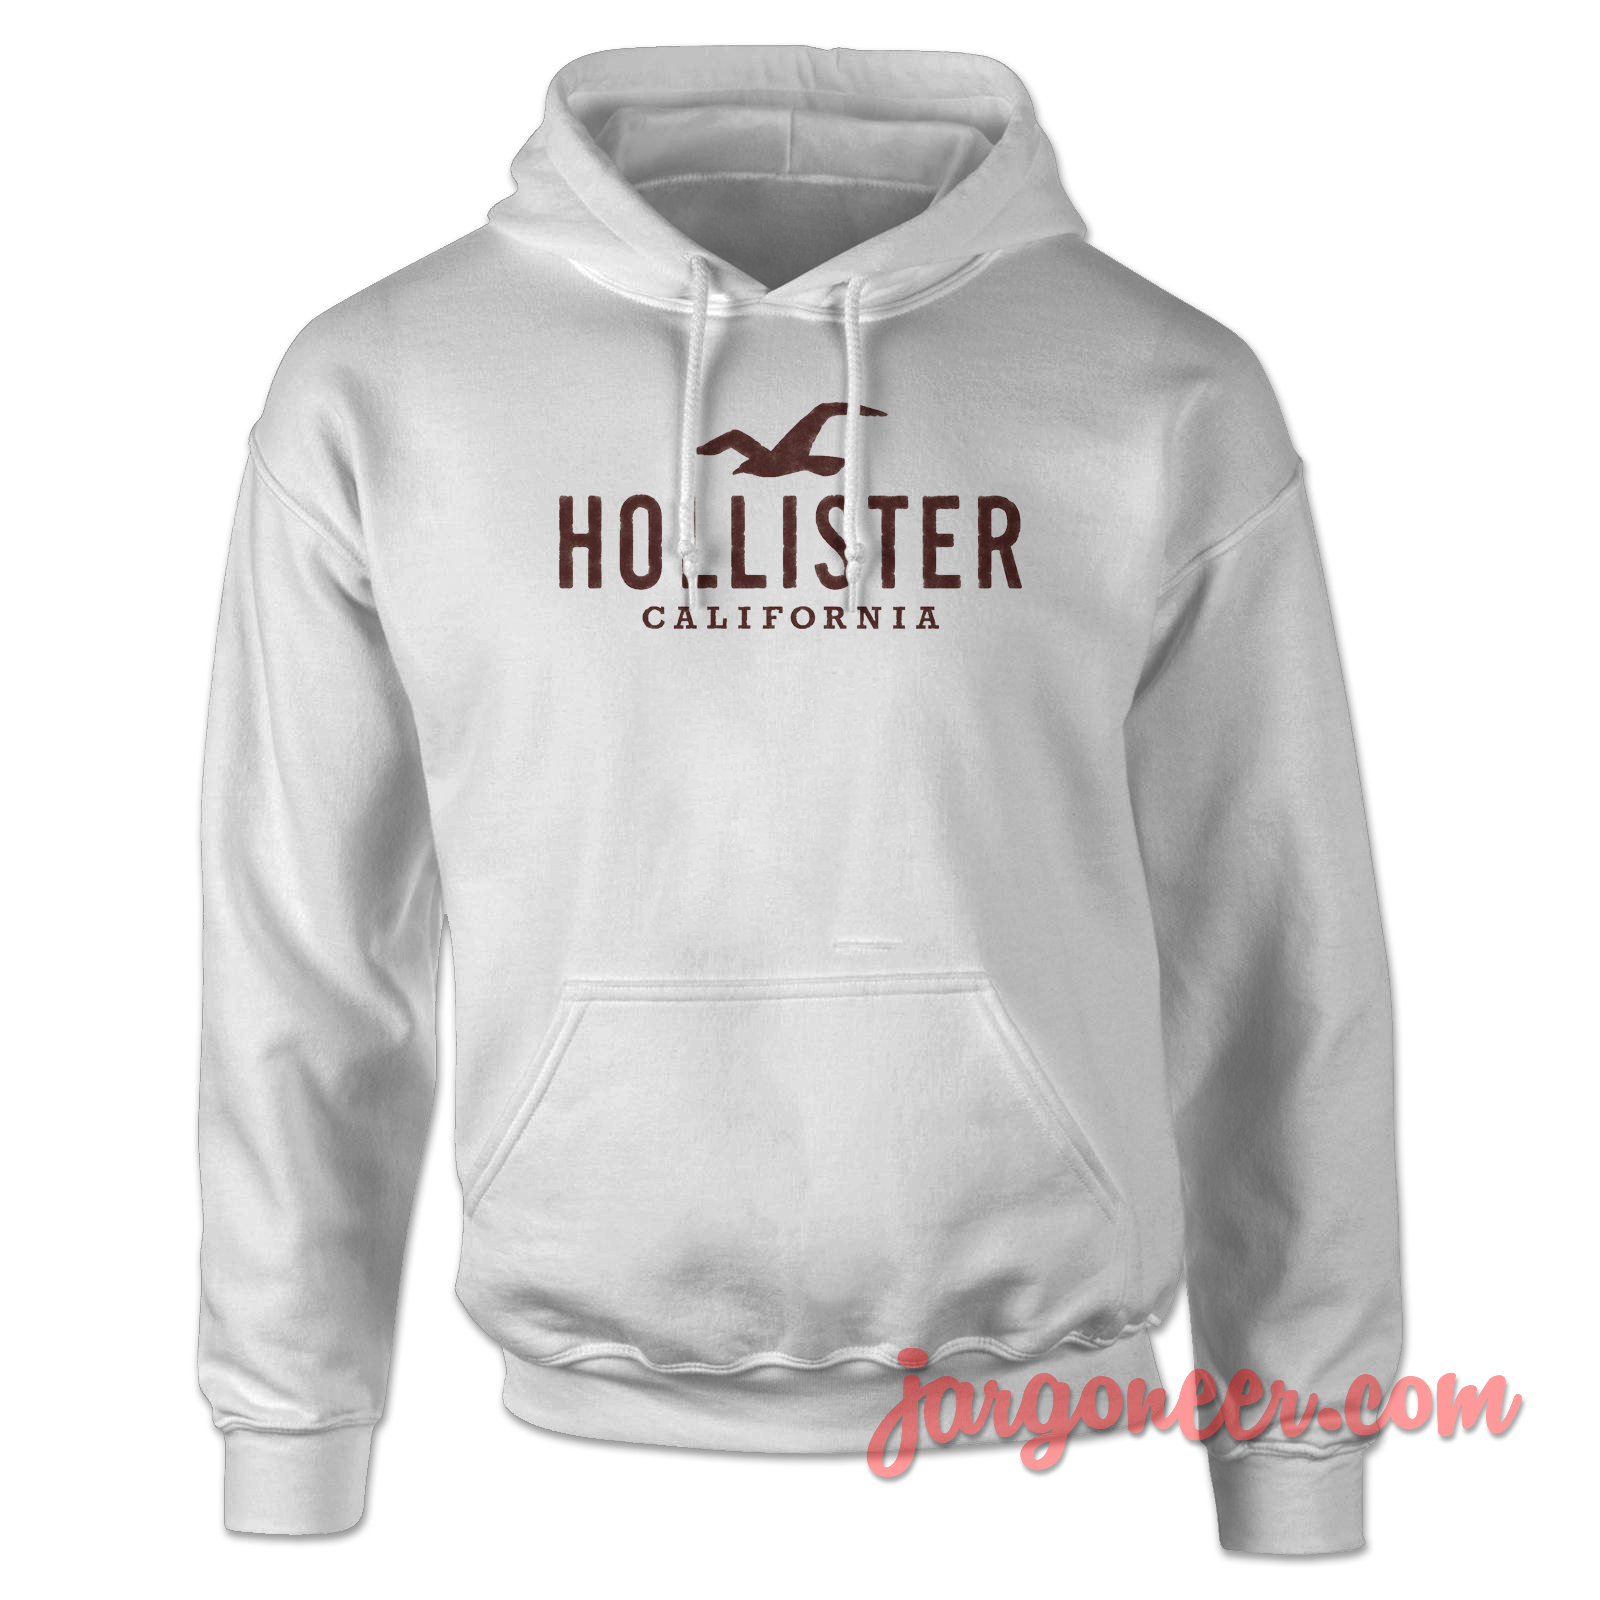 Hollister California Women’s Sweatshirt Logo Hoodie Size Small White